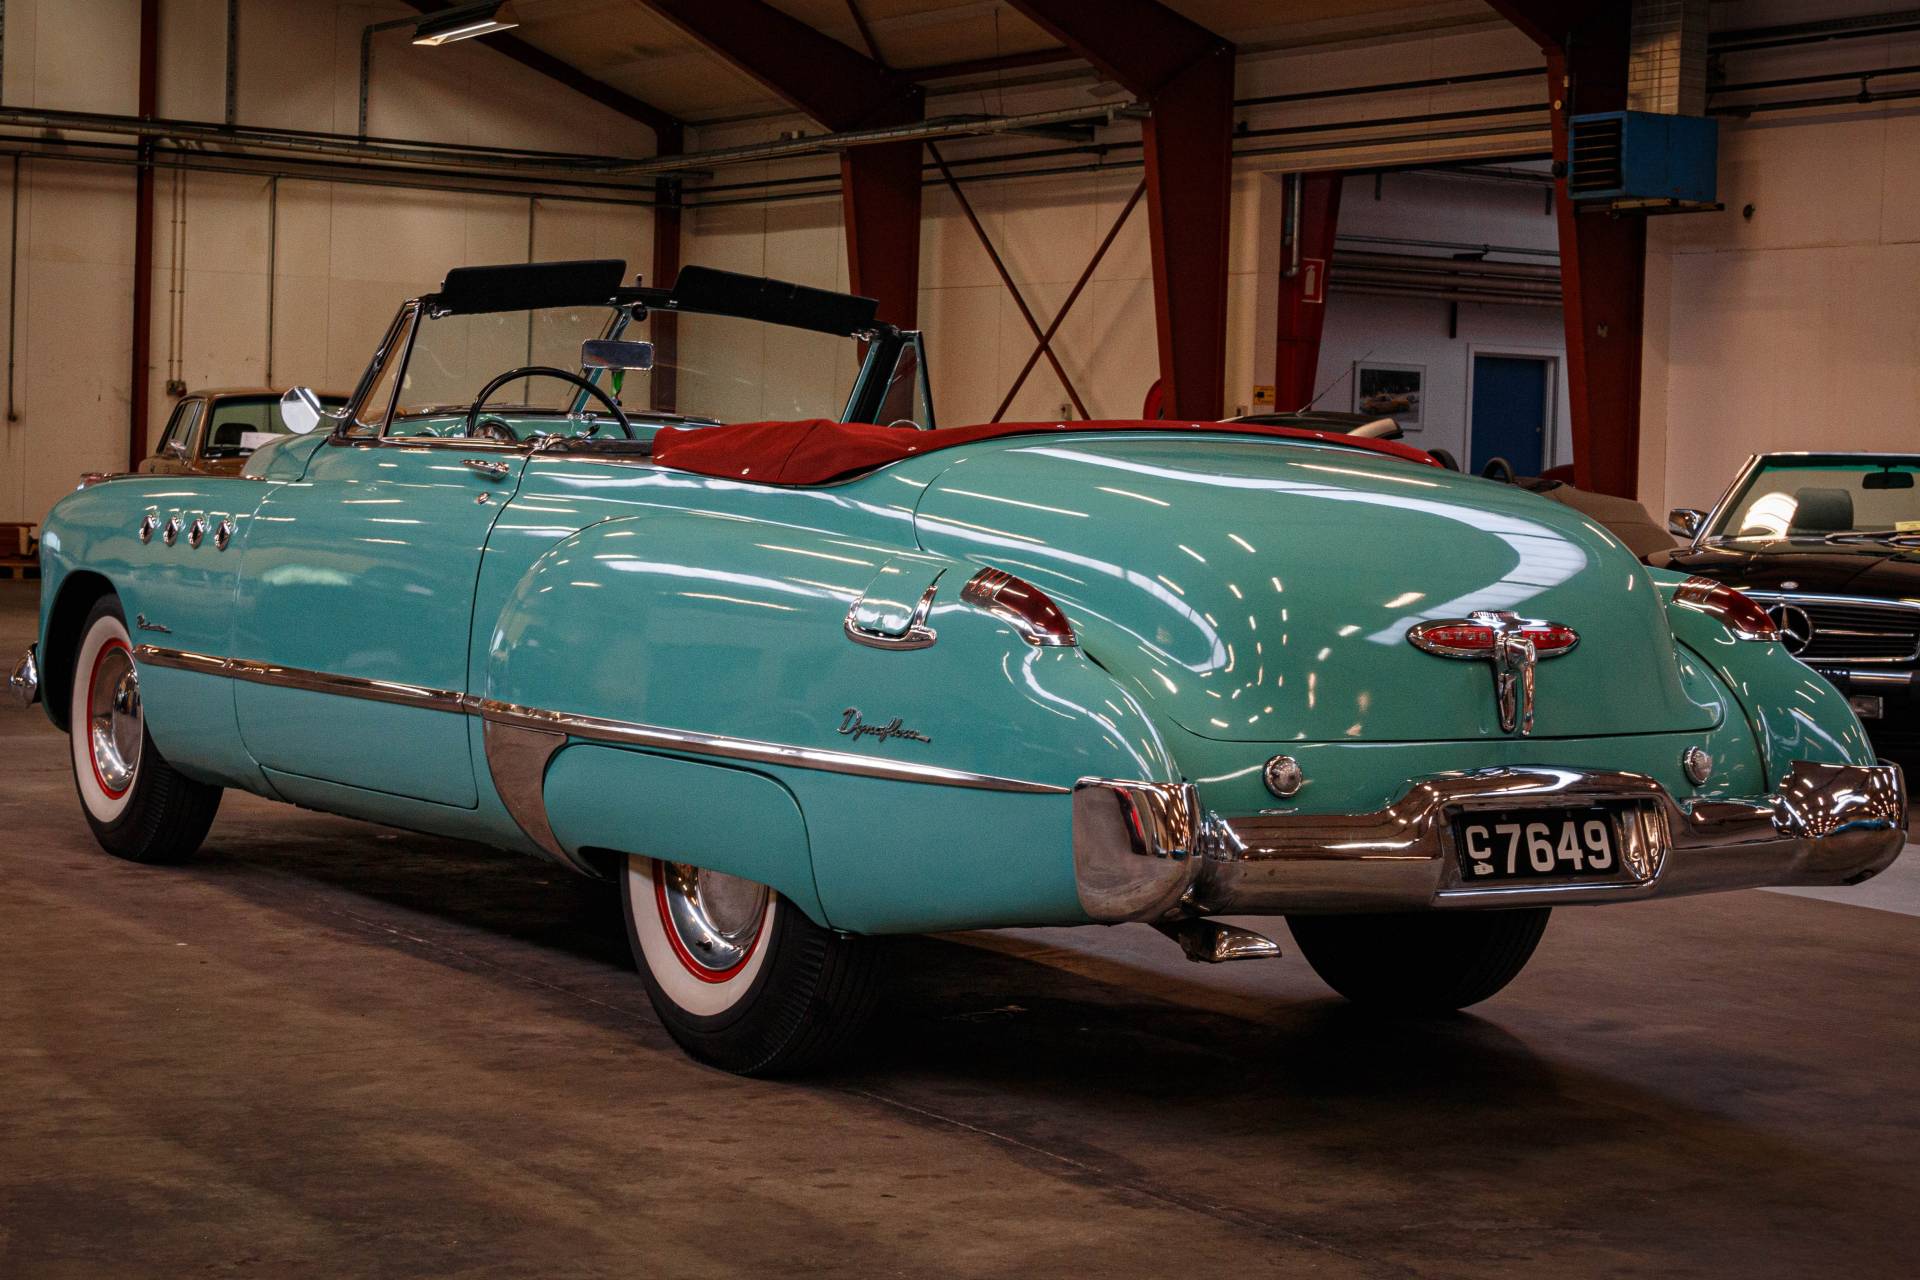 Classic 1951 Buick Roadmaster Riviera Zu Verkaufen. Preis 45 000